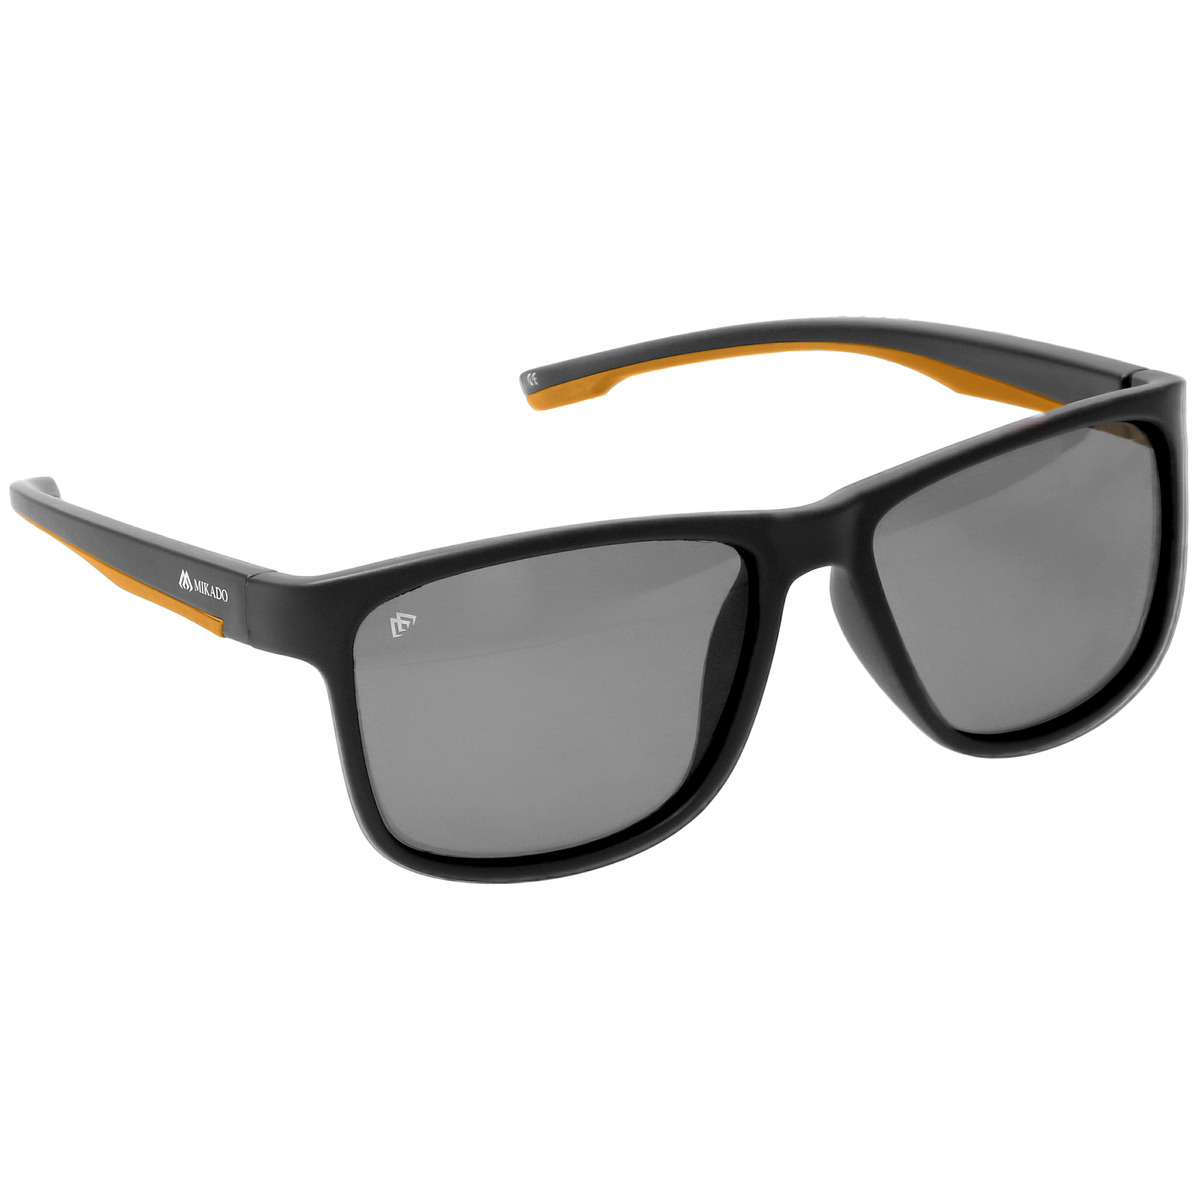 Mikado Sunglasses Polarized - 484 AMBER BROWN